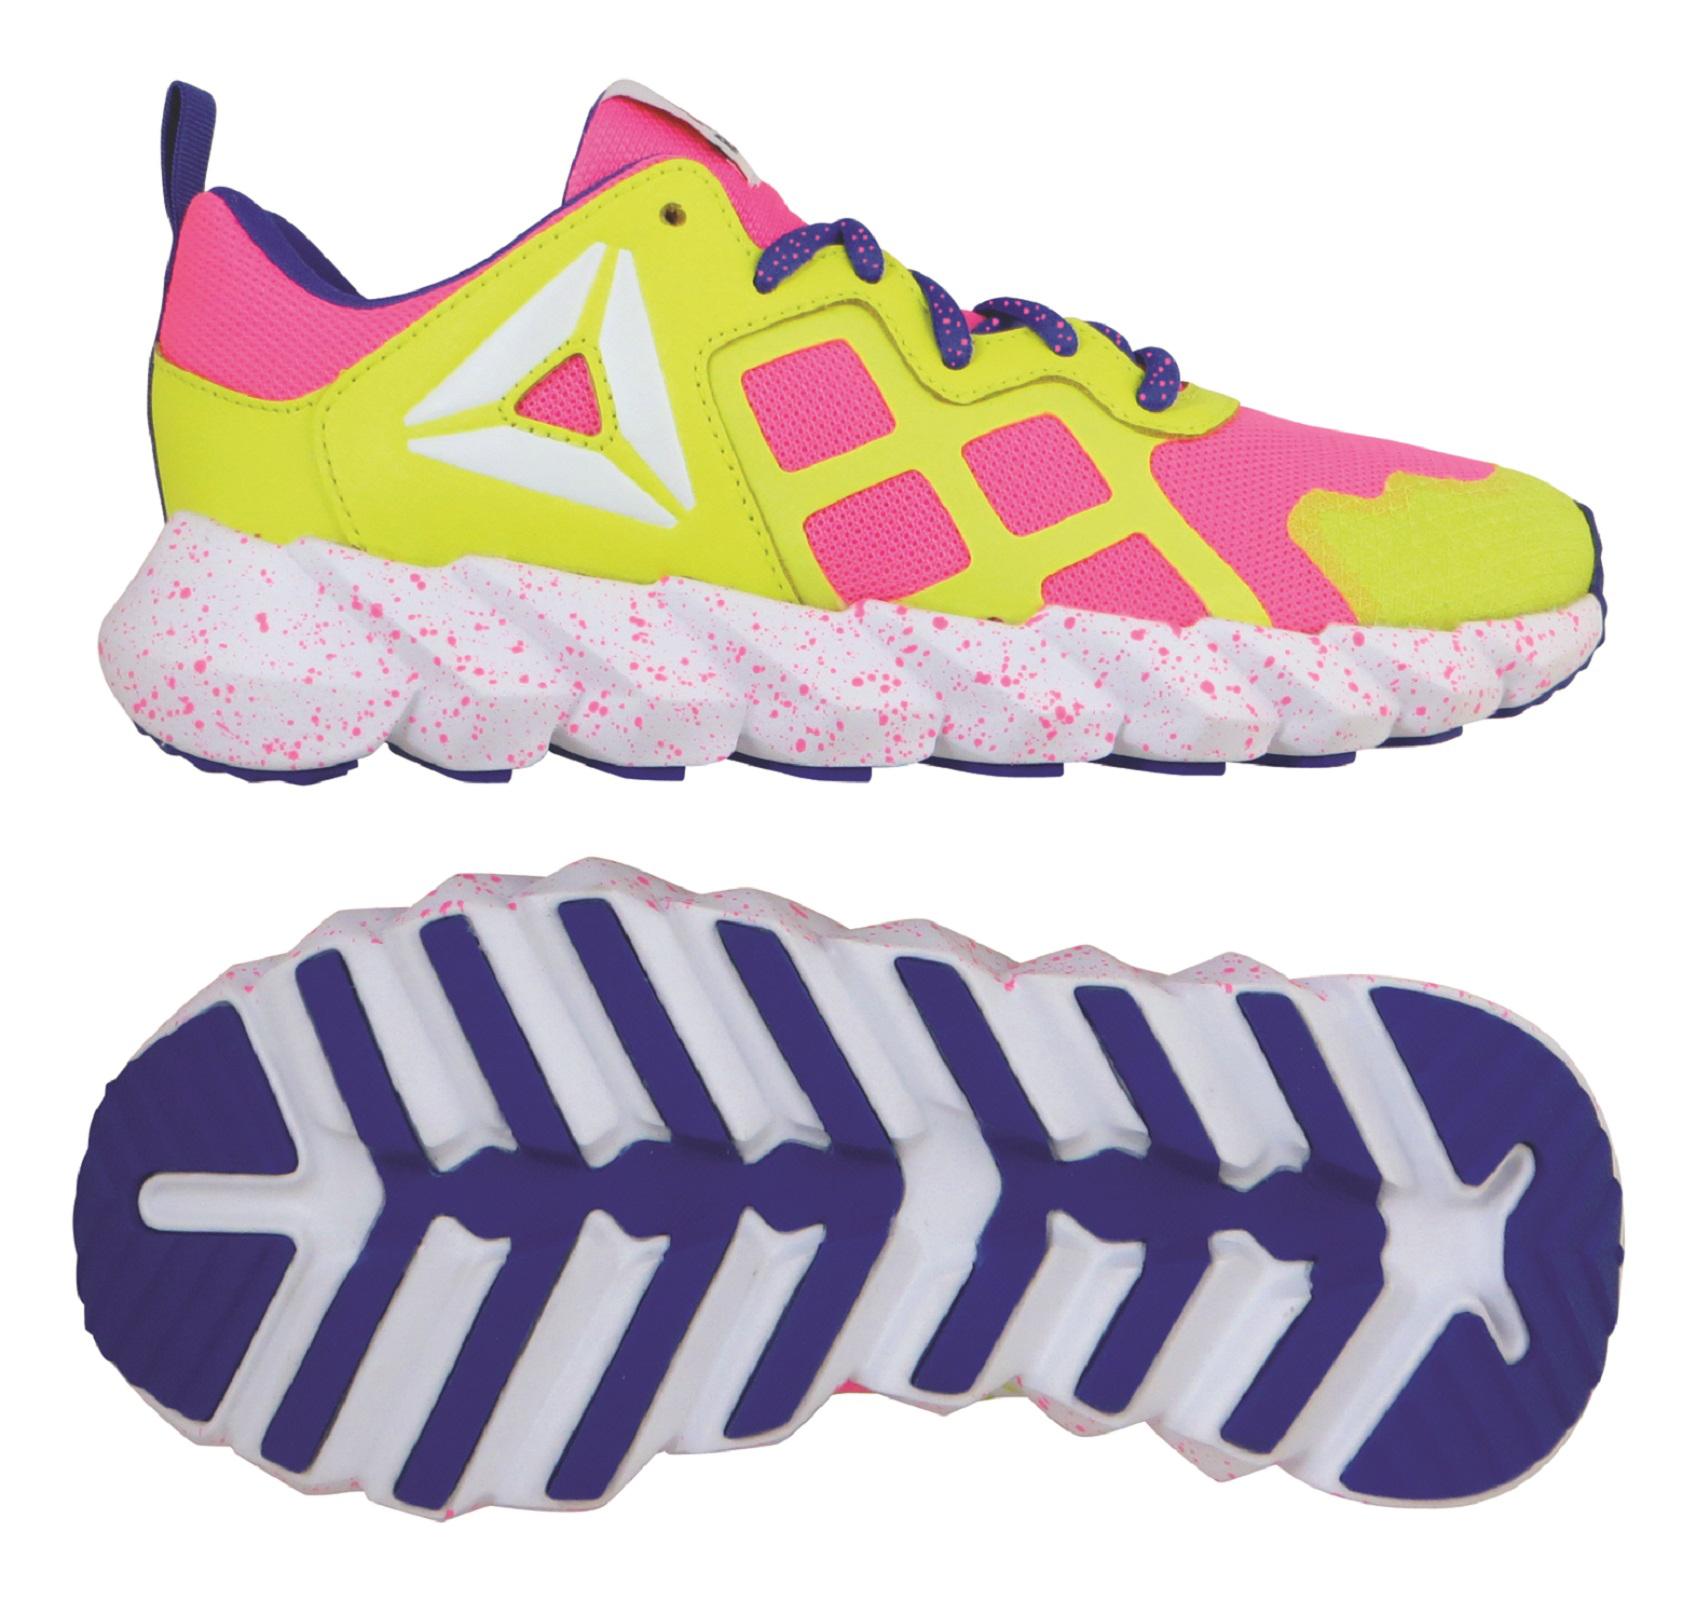 Reebok Girl's Exocage Pink/Yellow Athletic Shoe